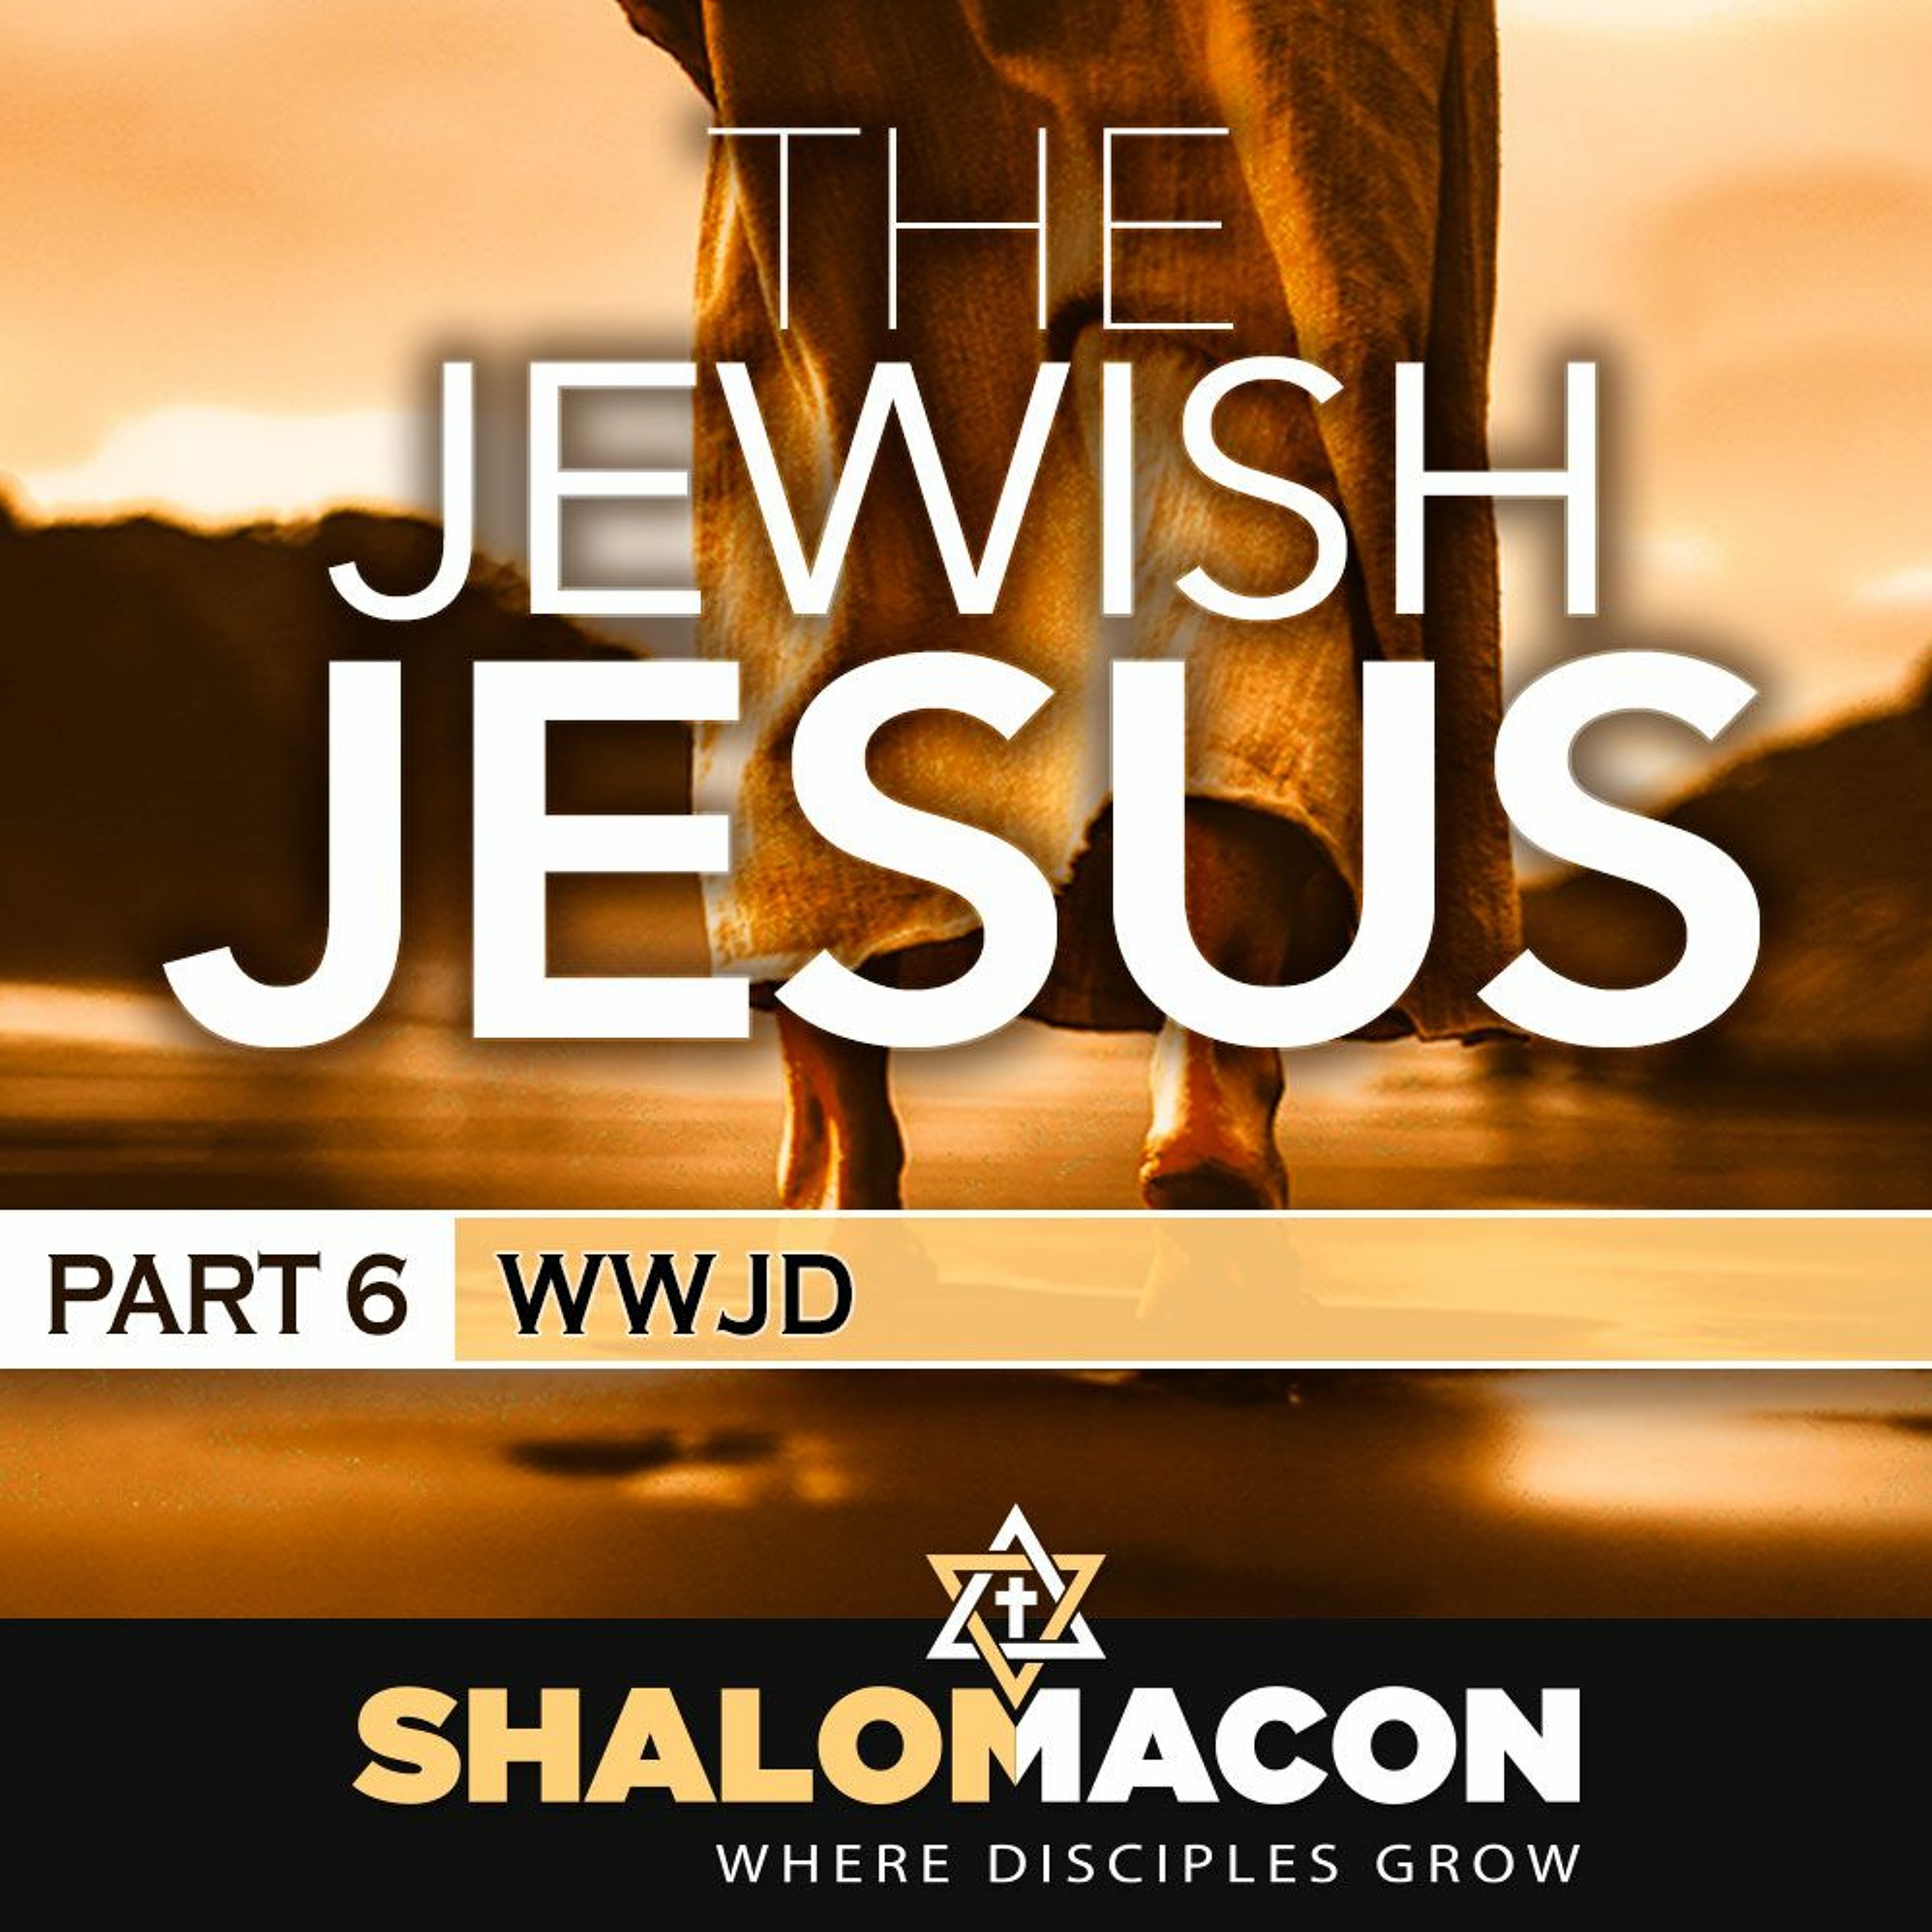 The Jewish Jesus - Part 6: WWJD